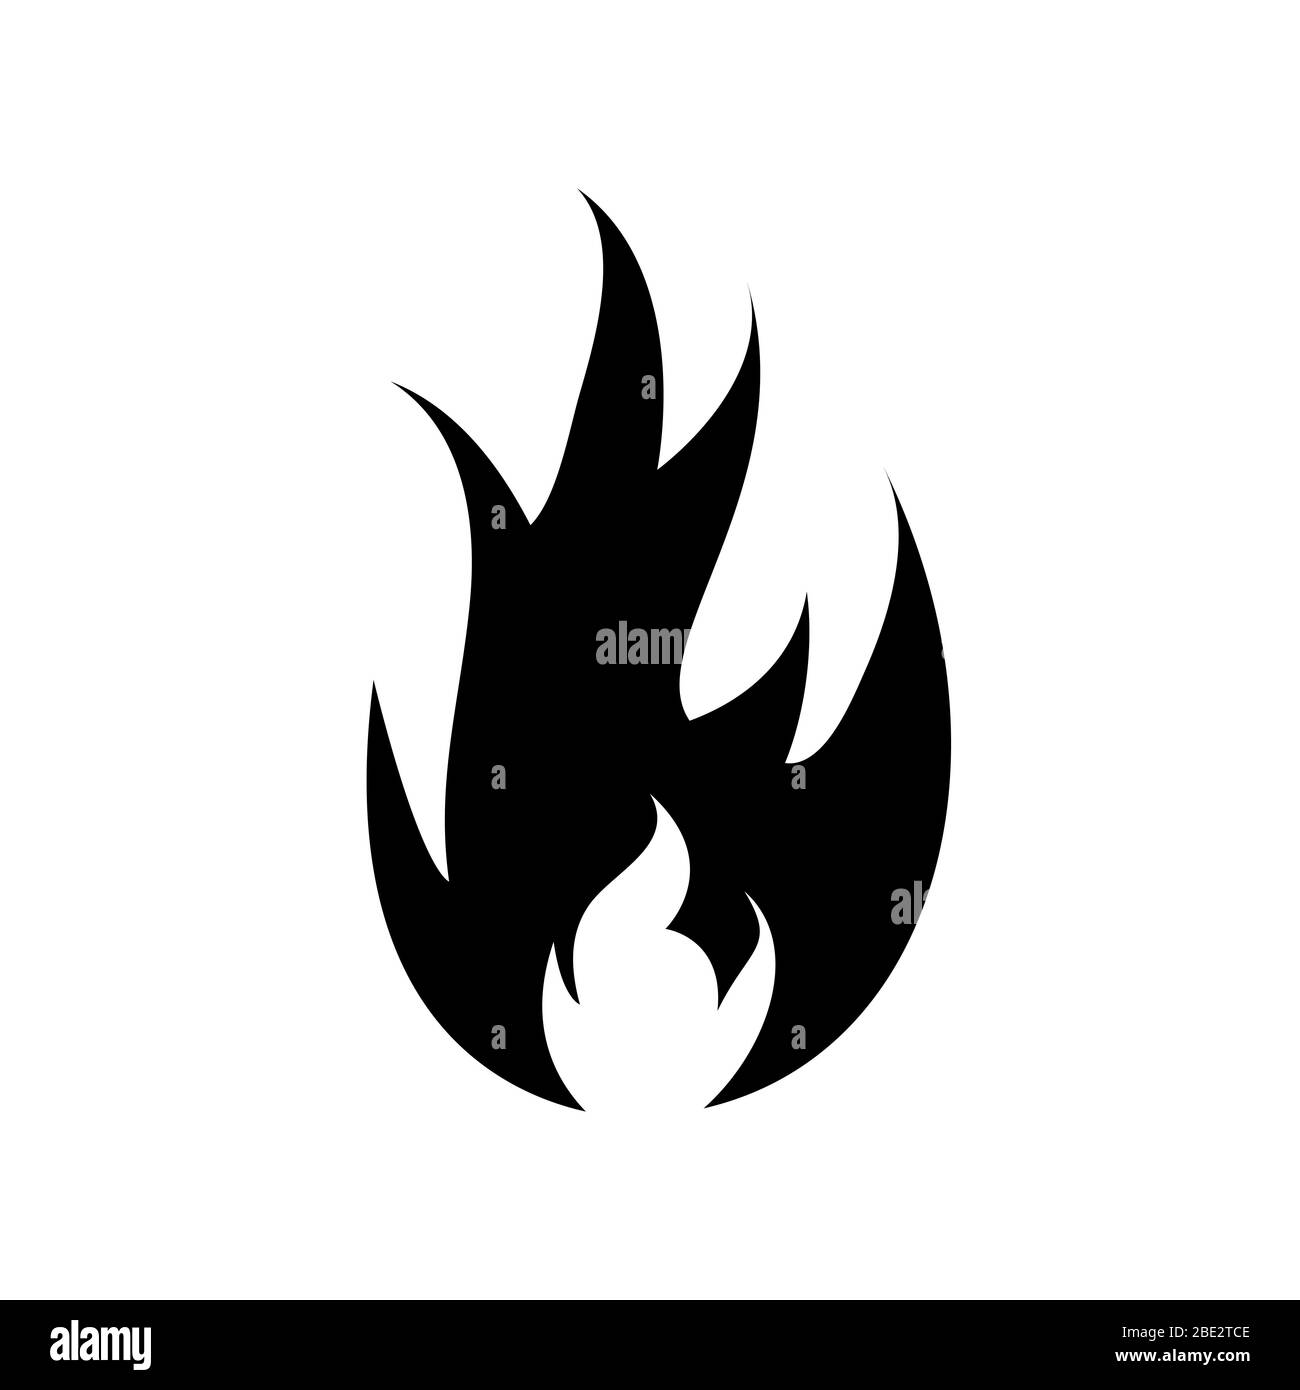 Black flame silhouette symbol, minimalist flat vector illustration icon, symbol for heat, fire or bonfire Stock Vector